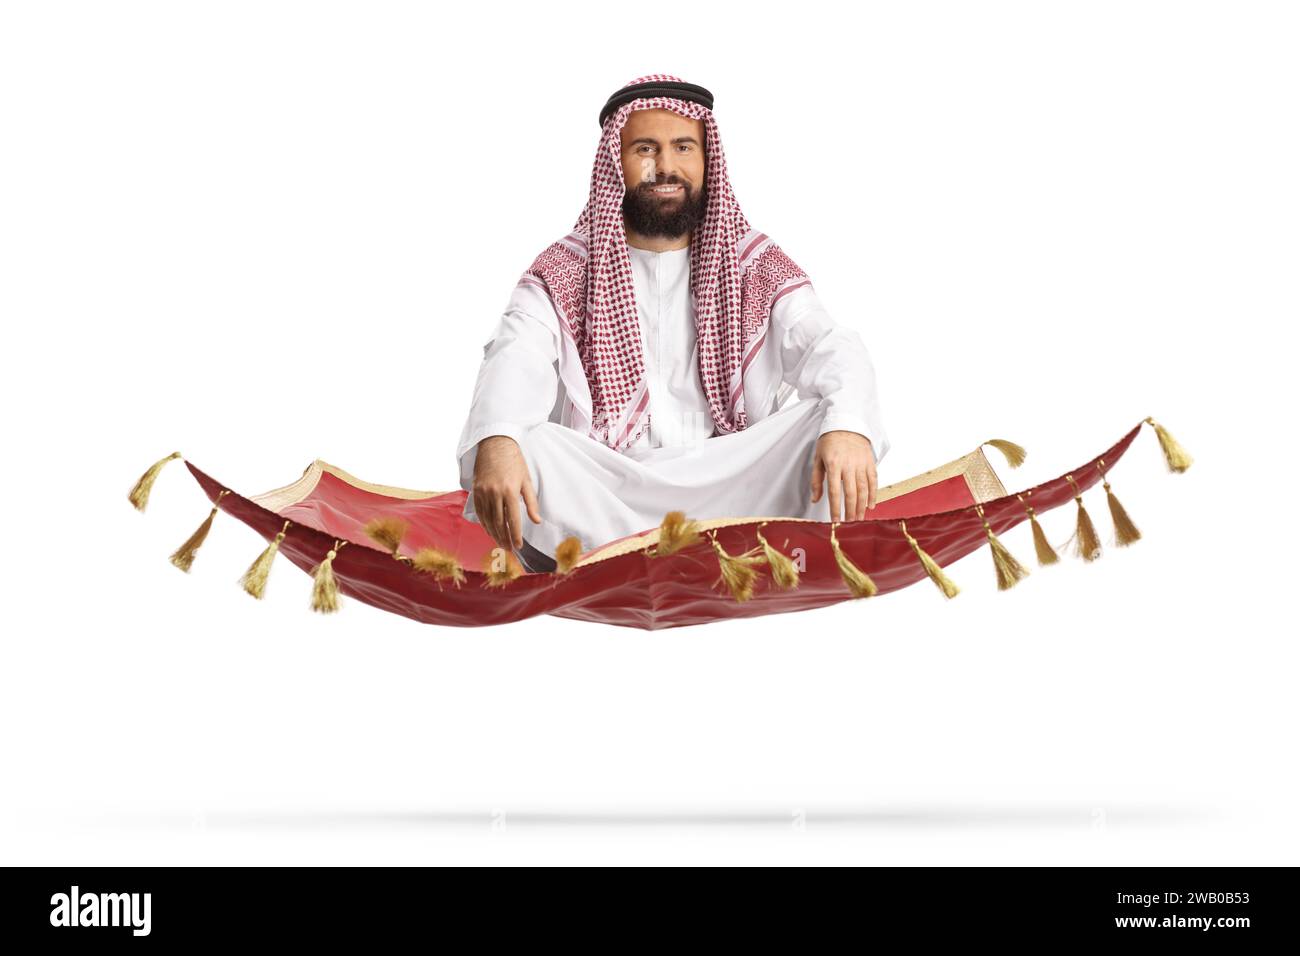 Bearded arab man sitting on a magic carpet and floating isolated on white background Stock Photo